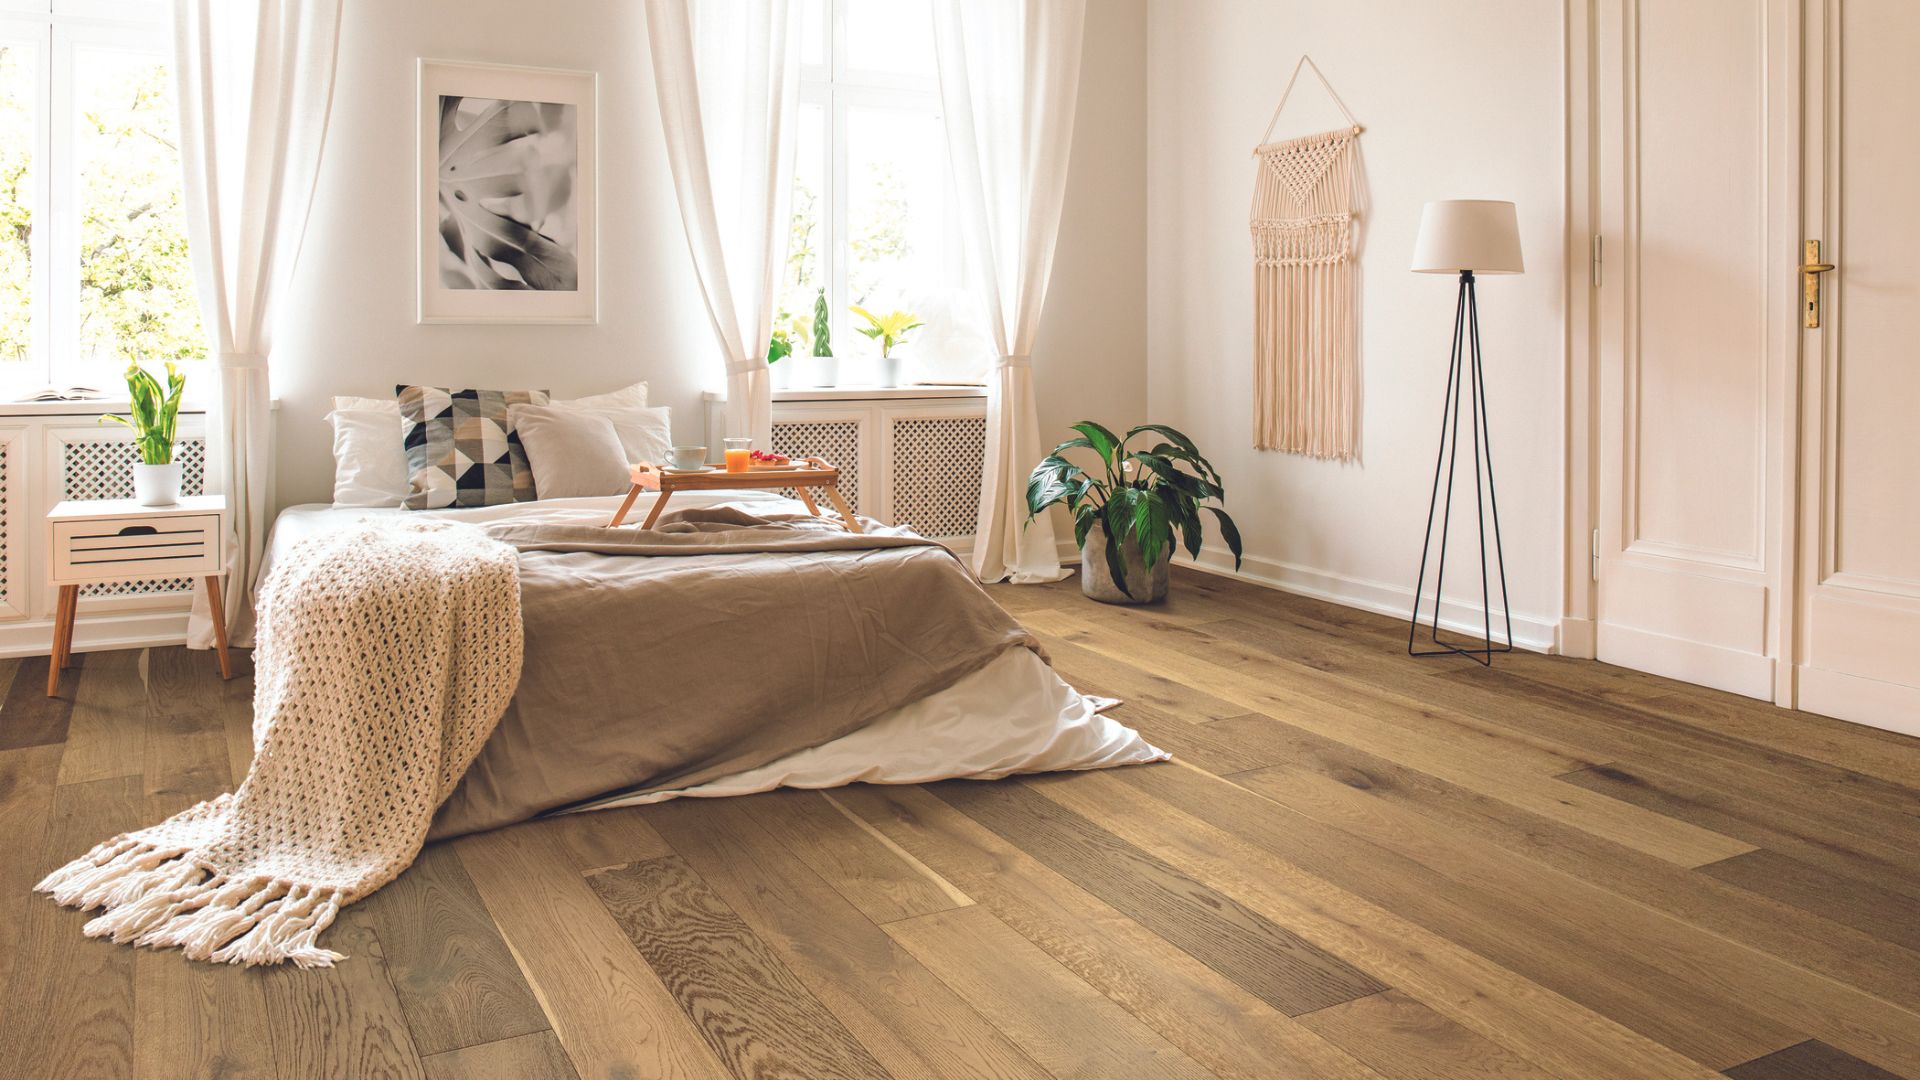 Laminate wood flooring in a bohemian style bedroom.